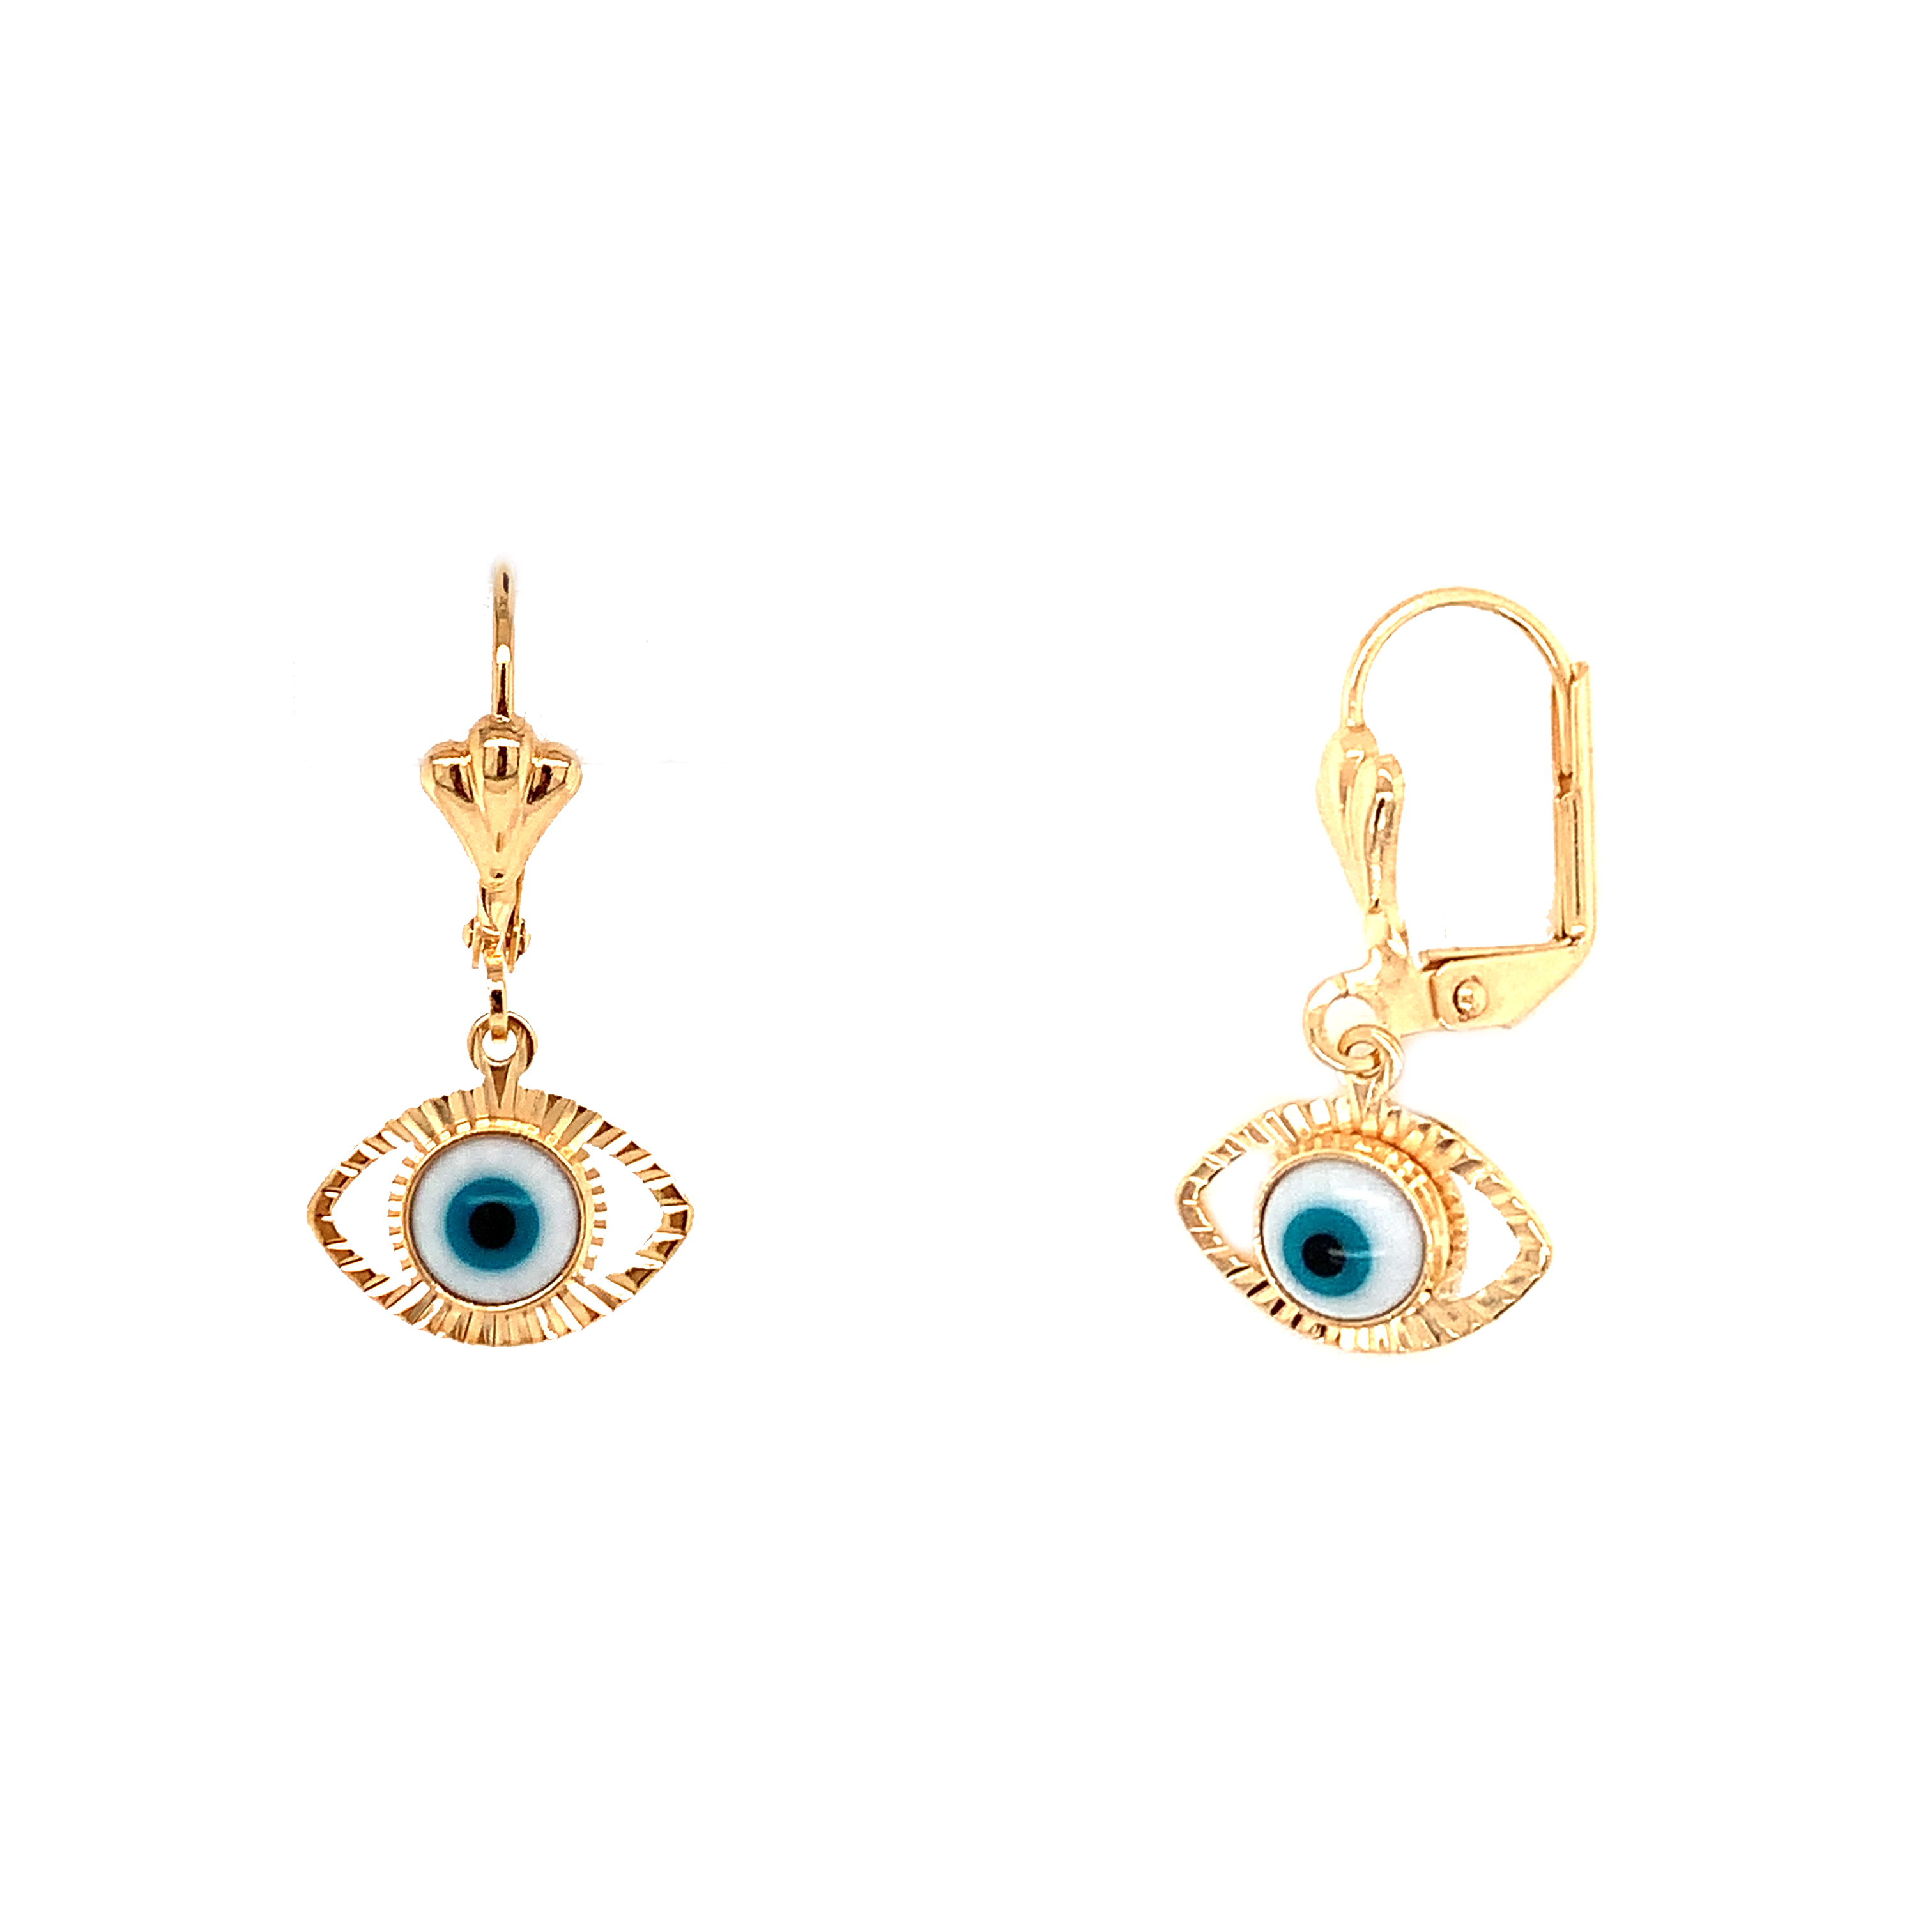 Dangling Lucky Eye Earrings - Gold Filled